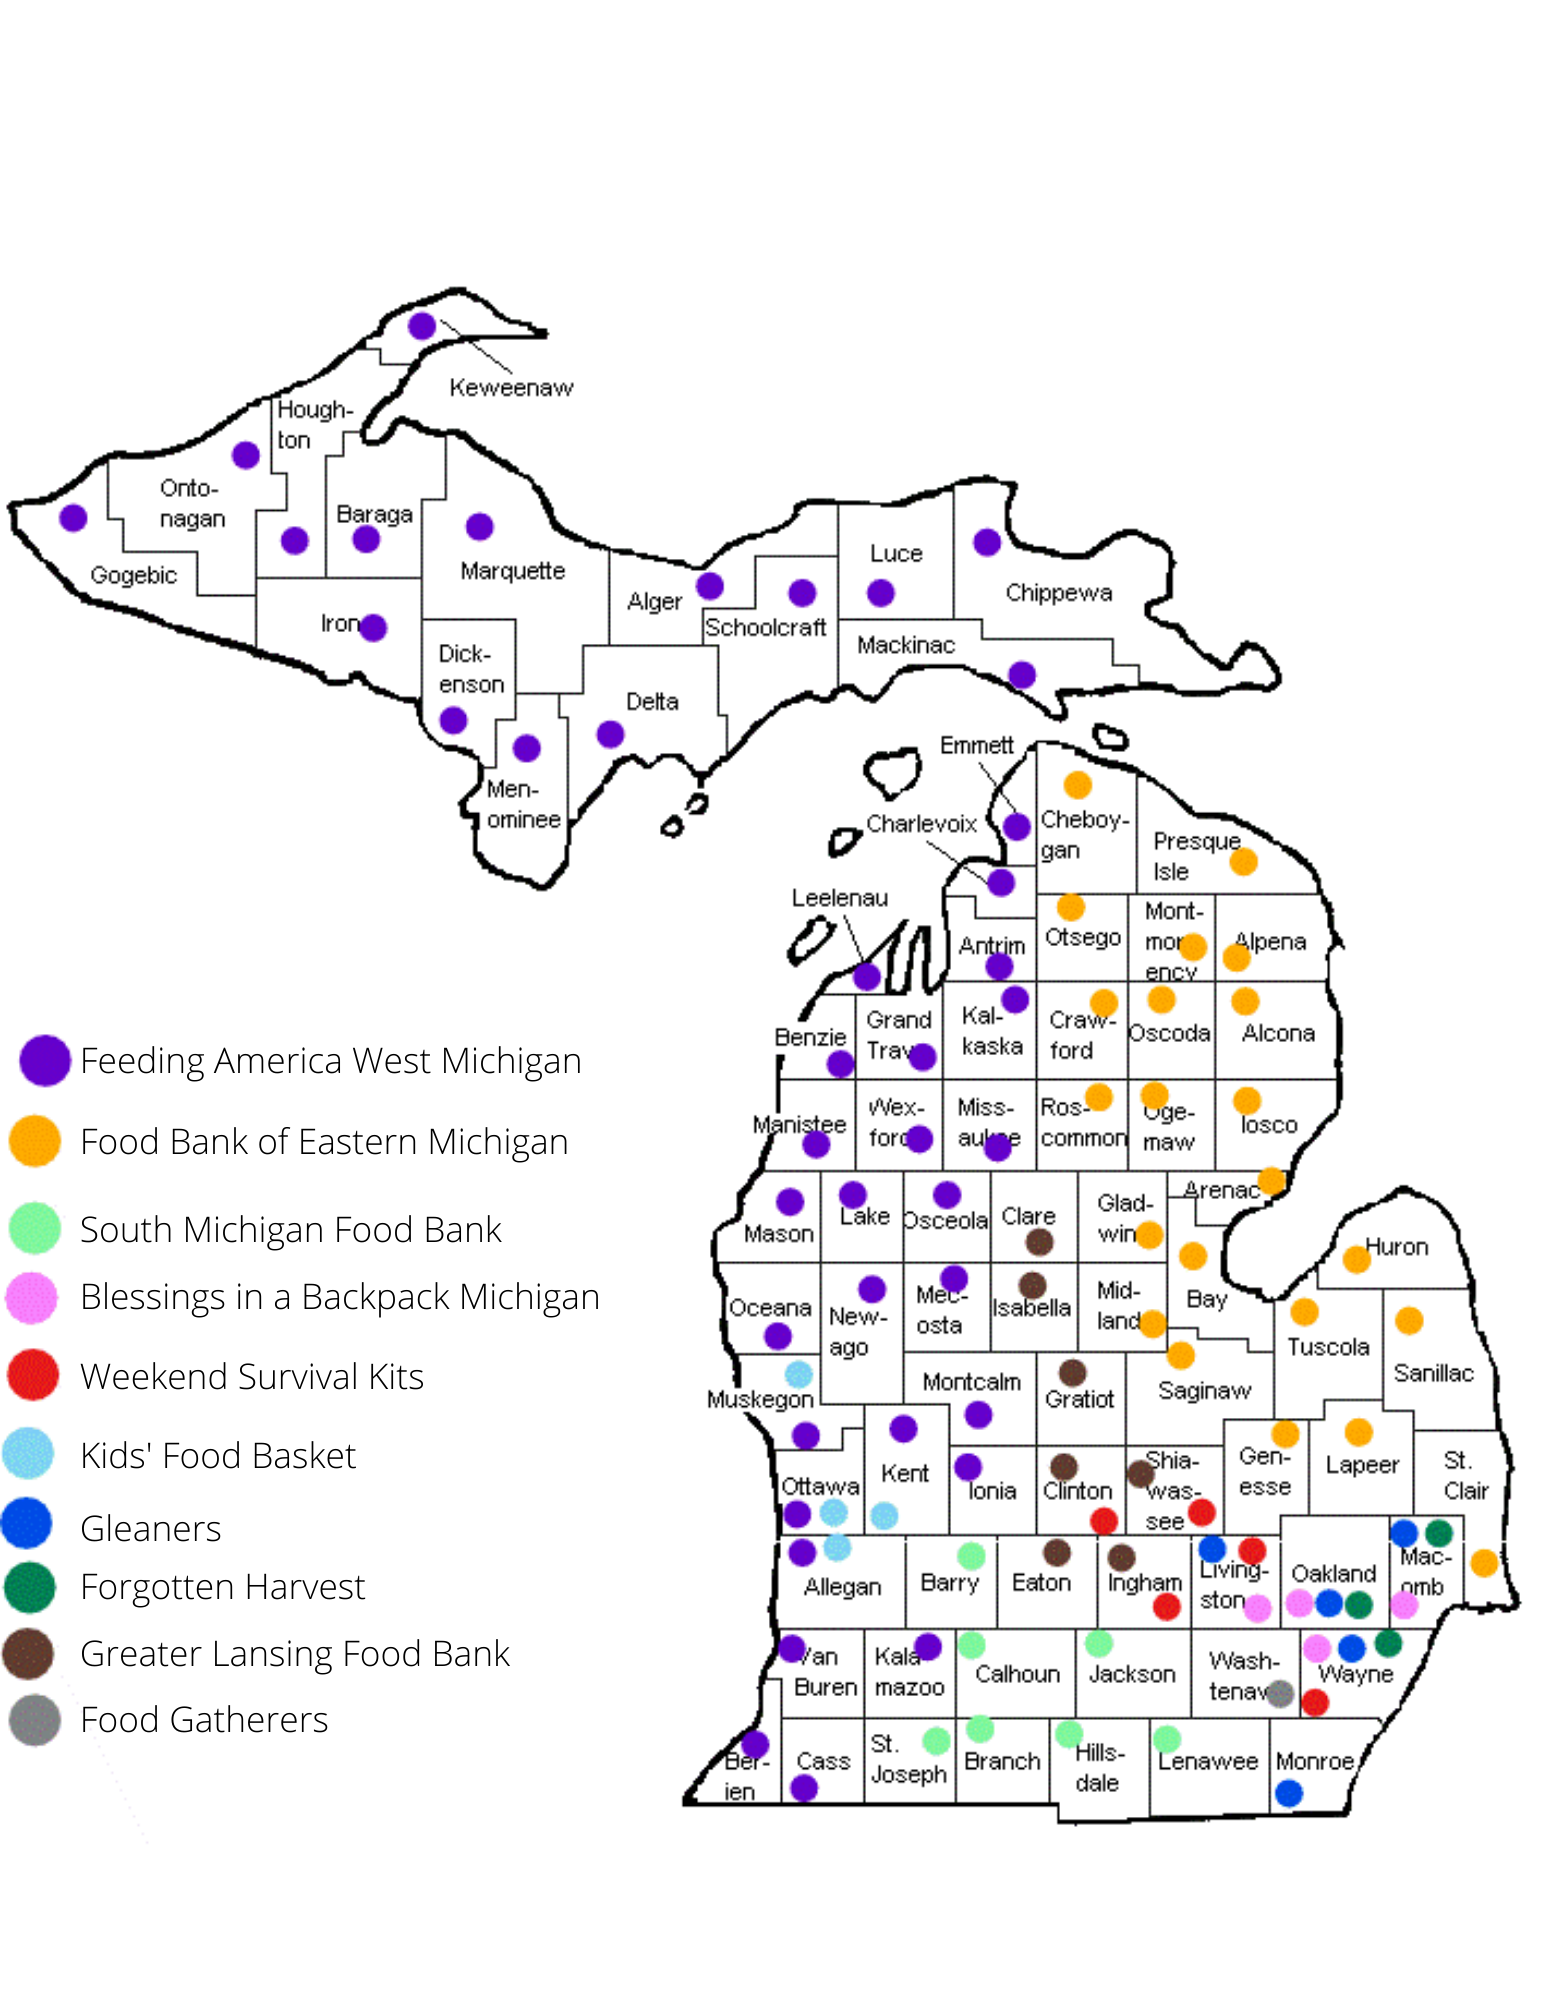 Michigan major food banks